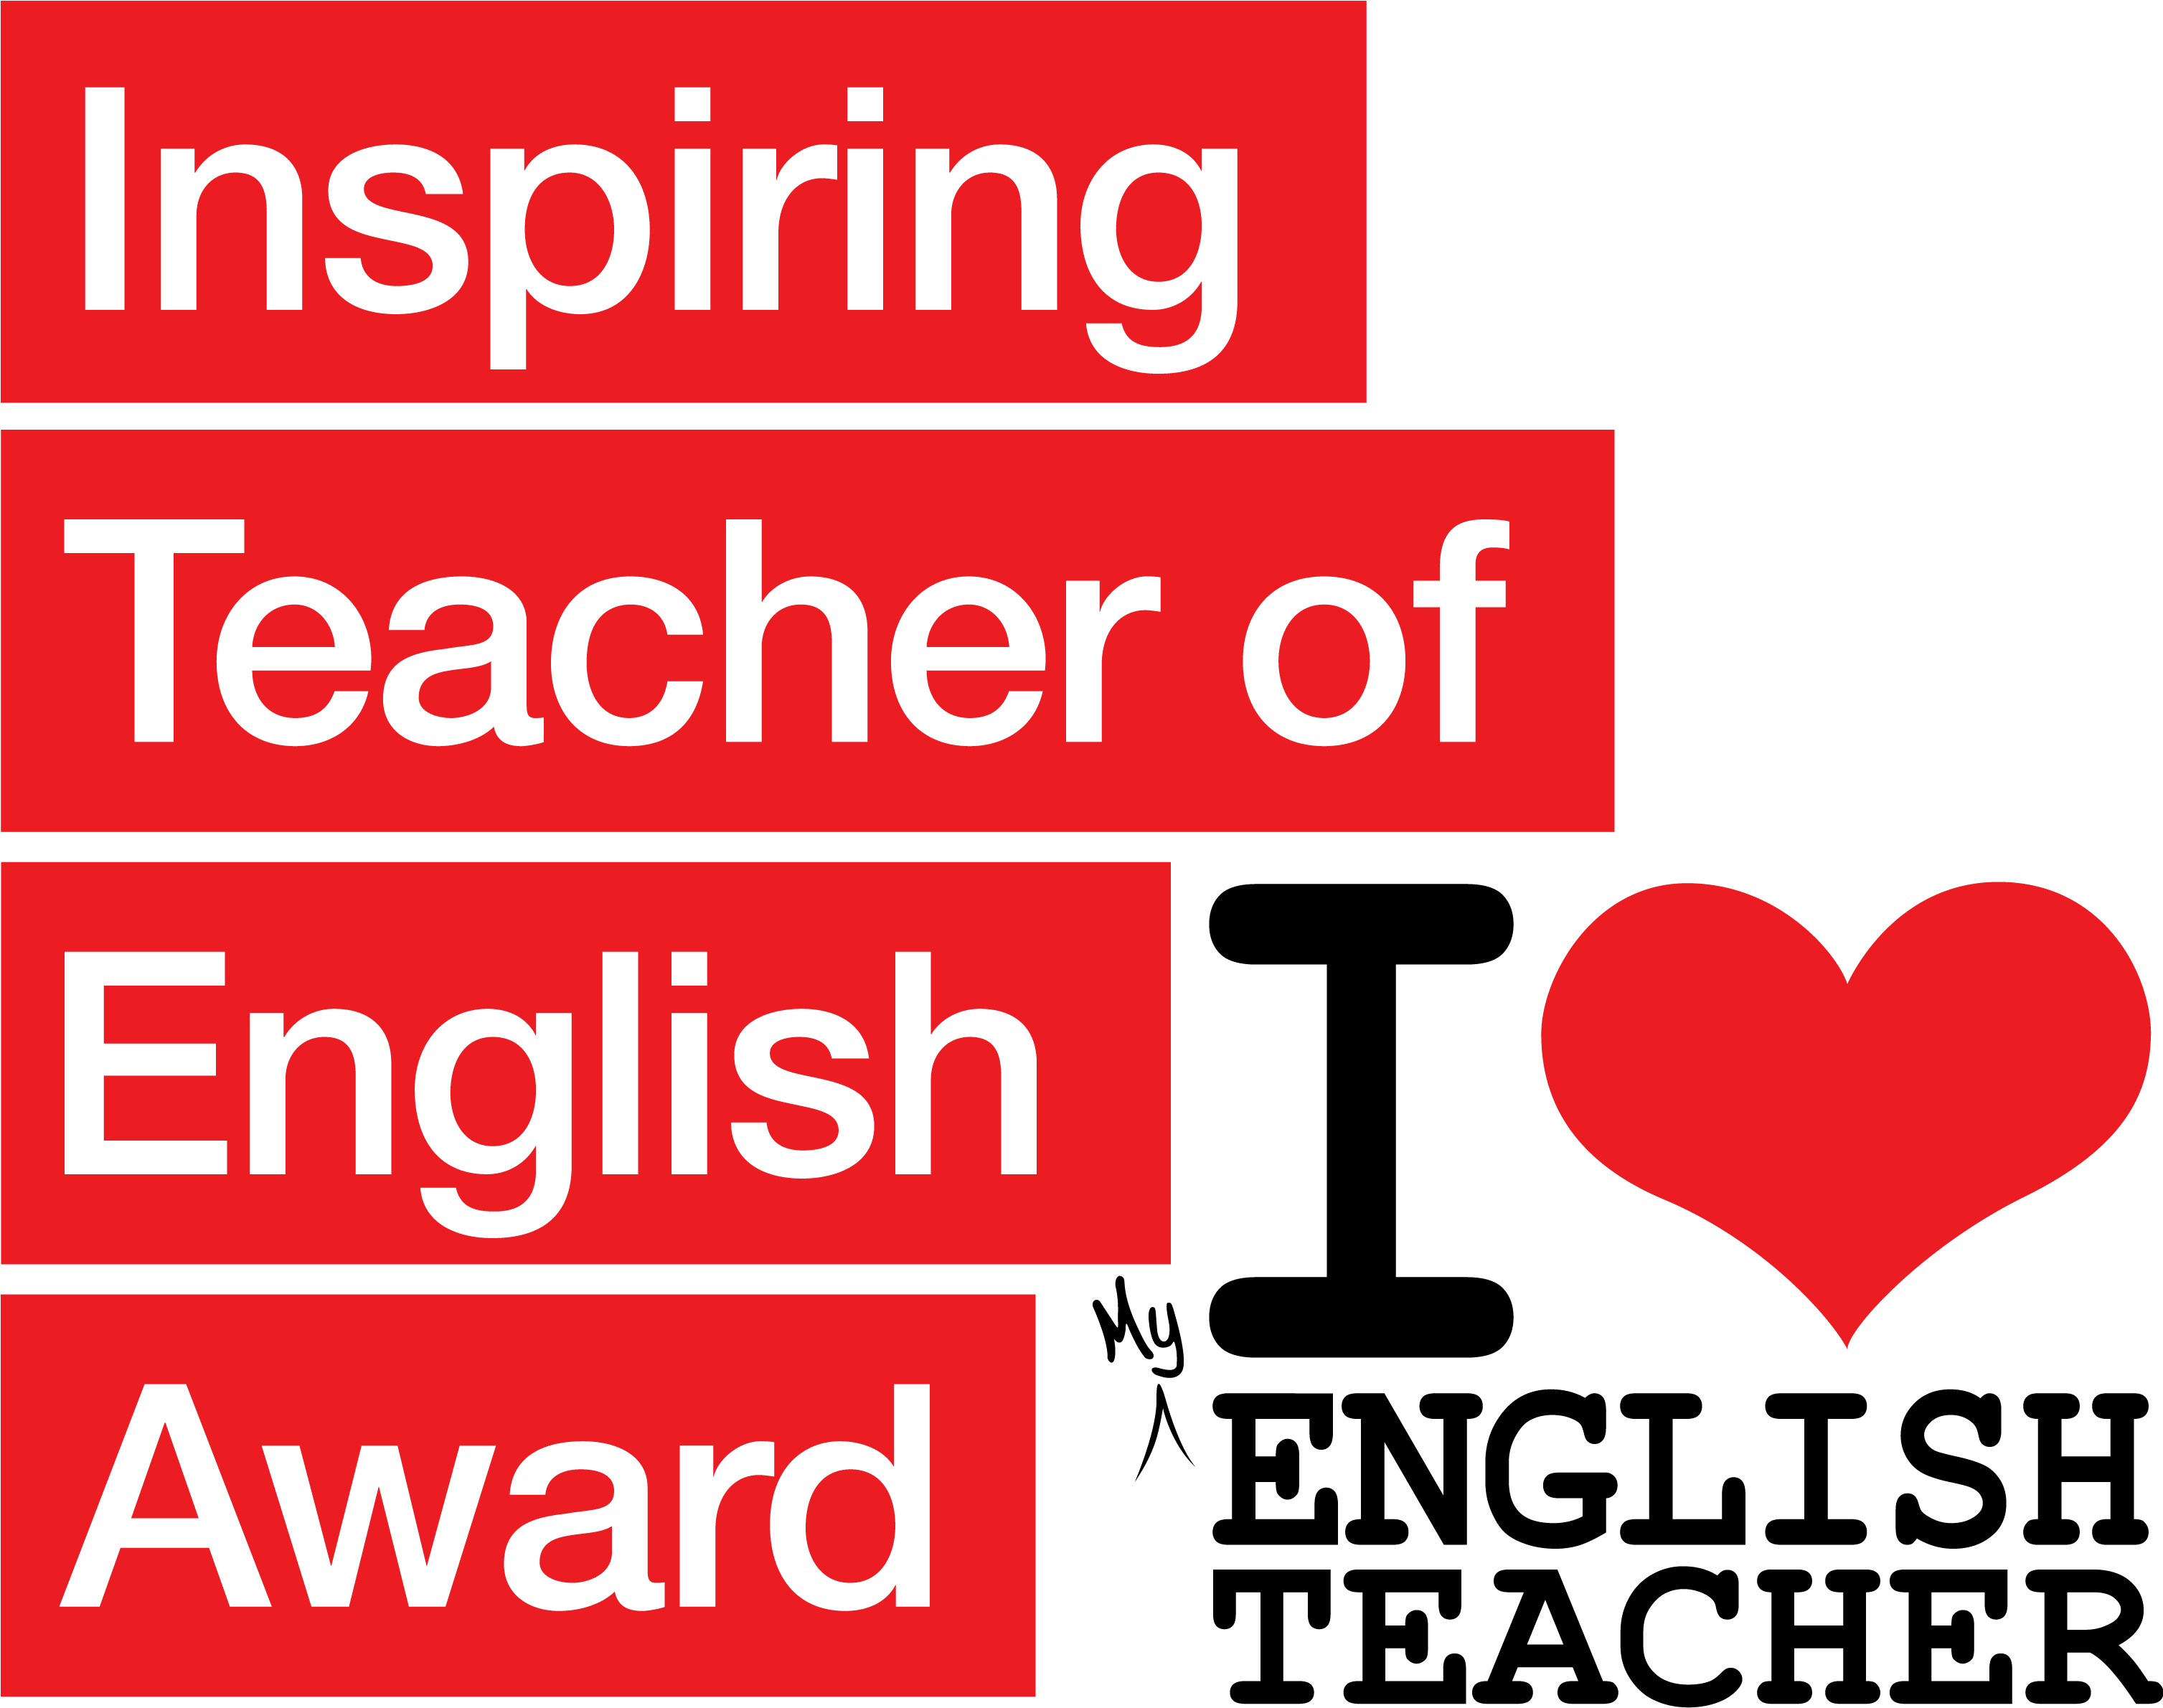 Inspiring Teacher Of English Award (3014x2469)